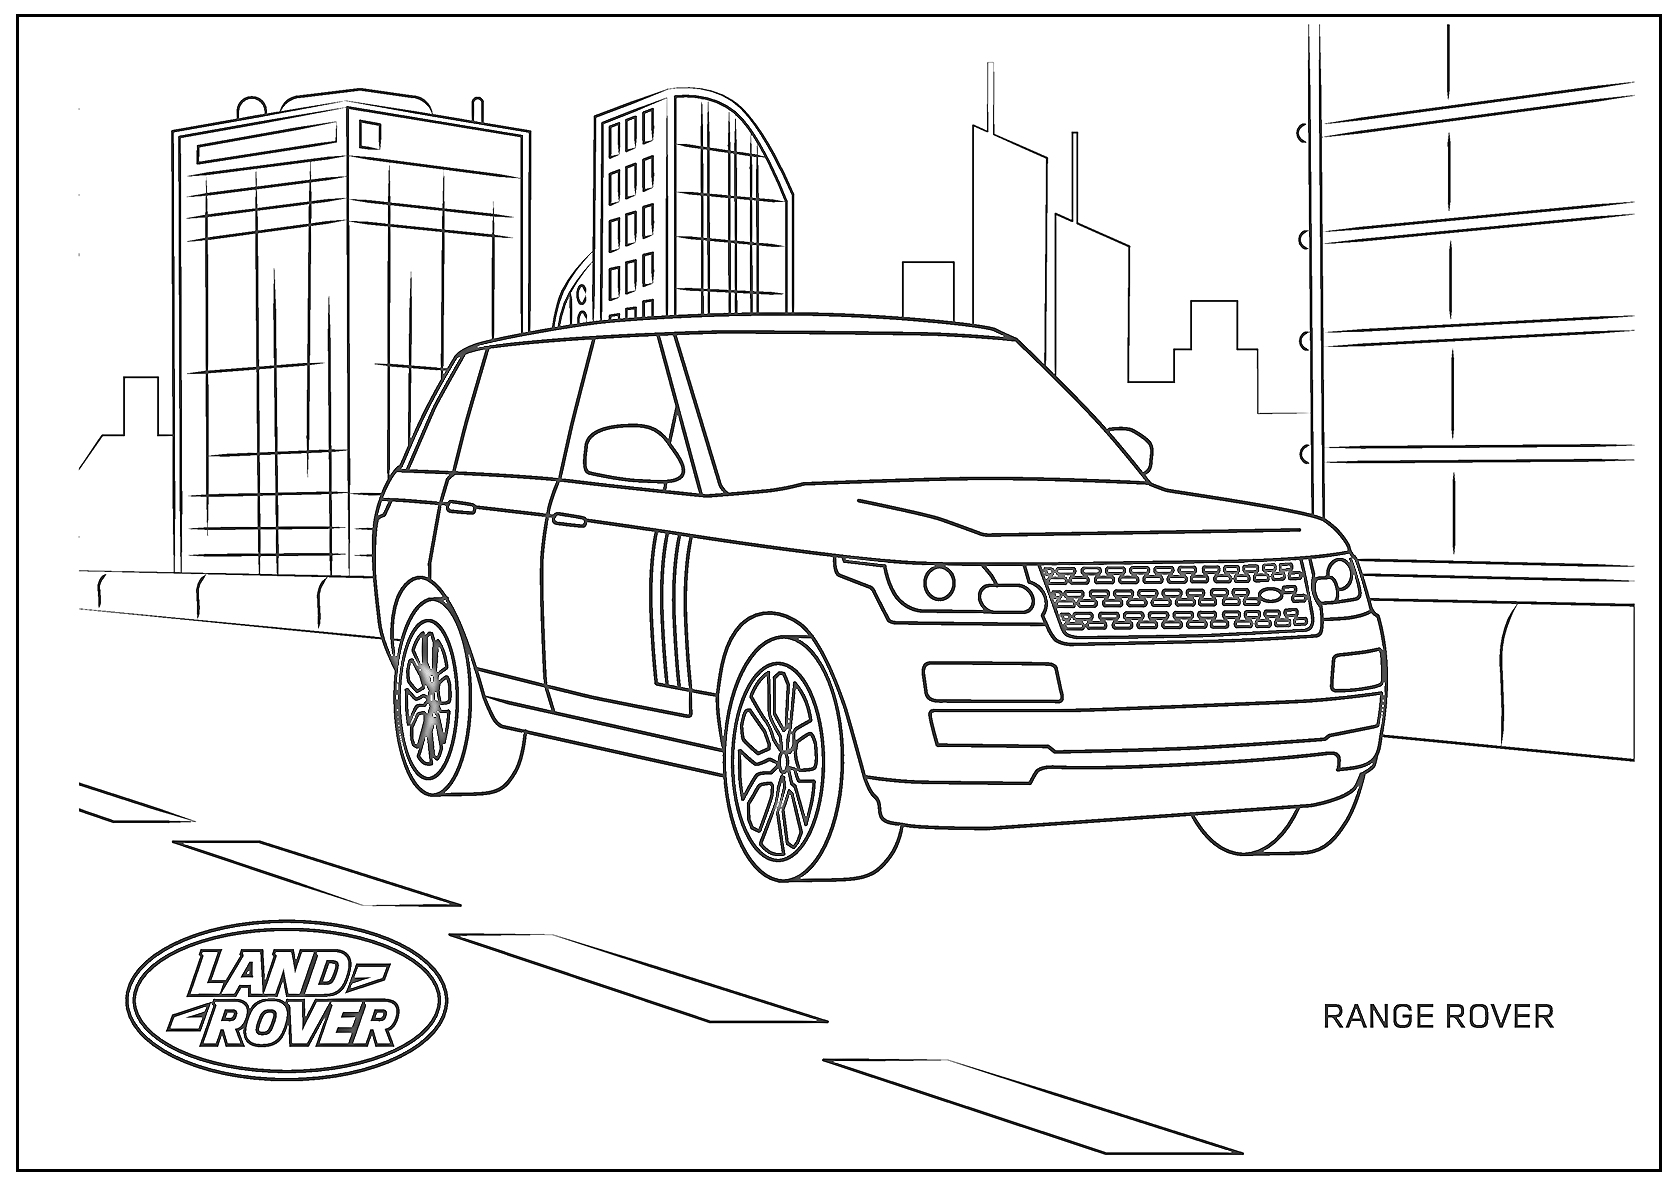 Раскраска Range Rover на фоне городской застройки